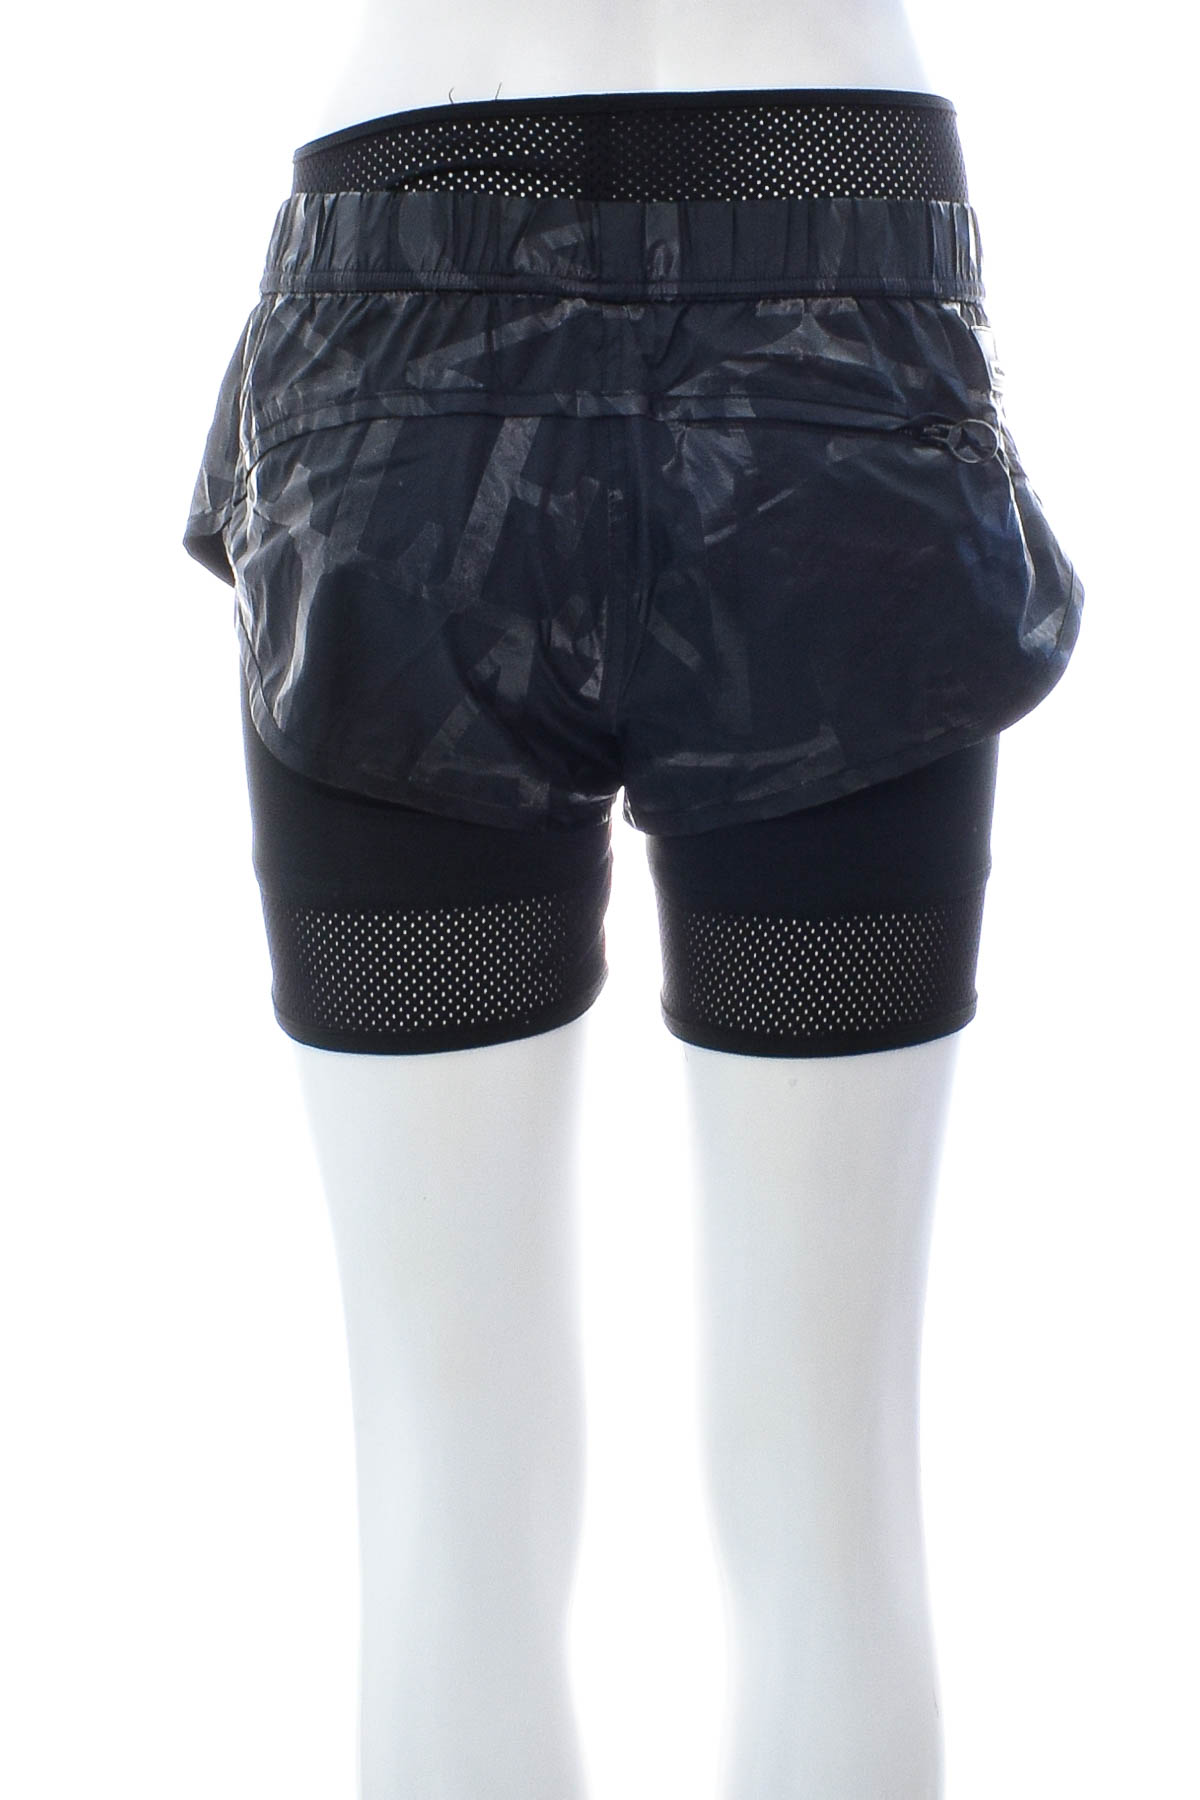 Women's shorts - Adidas by Stella McCartney - 1